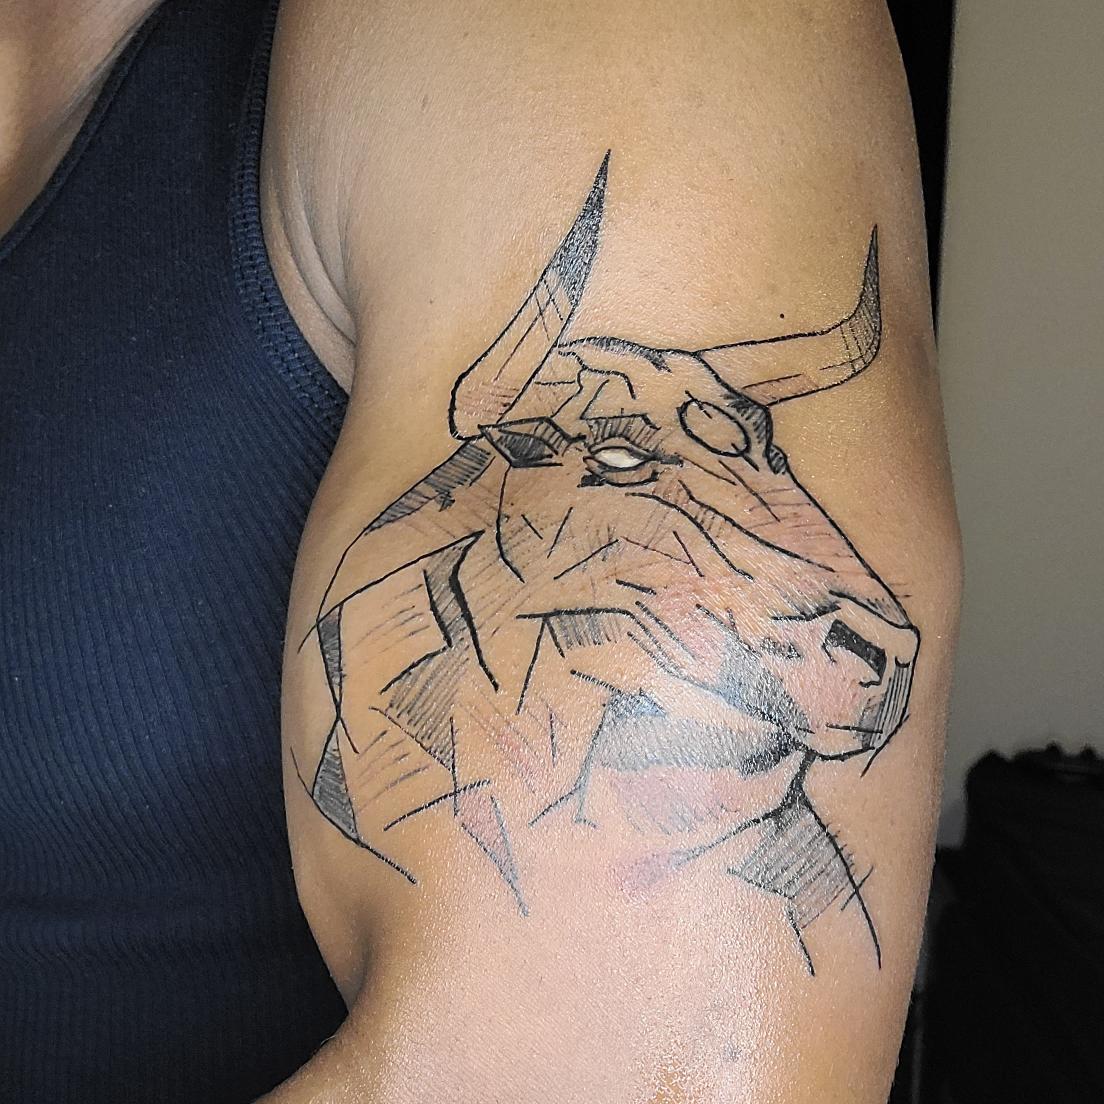 #Taurus #Bullheaded
#nashvilletattoo #tattoo #tattooideas